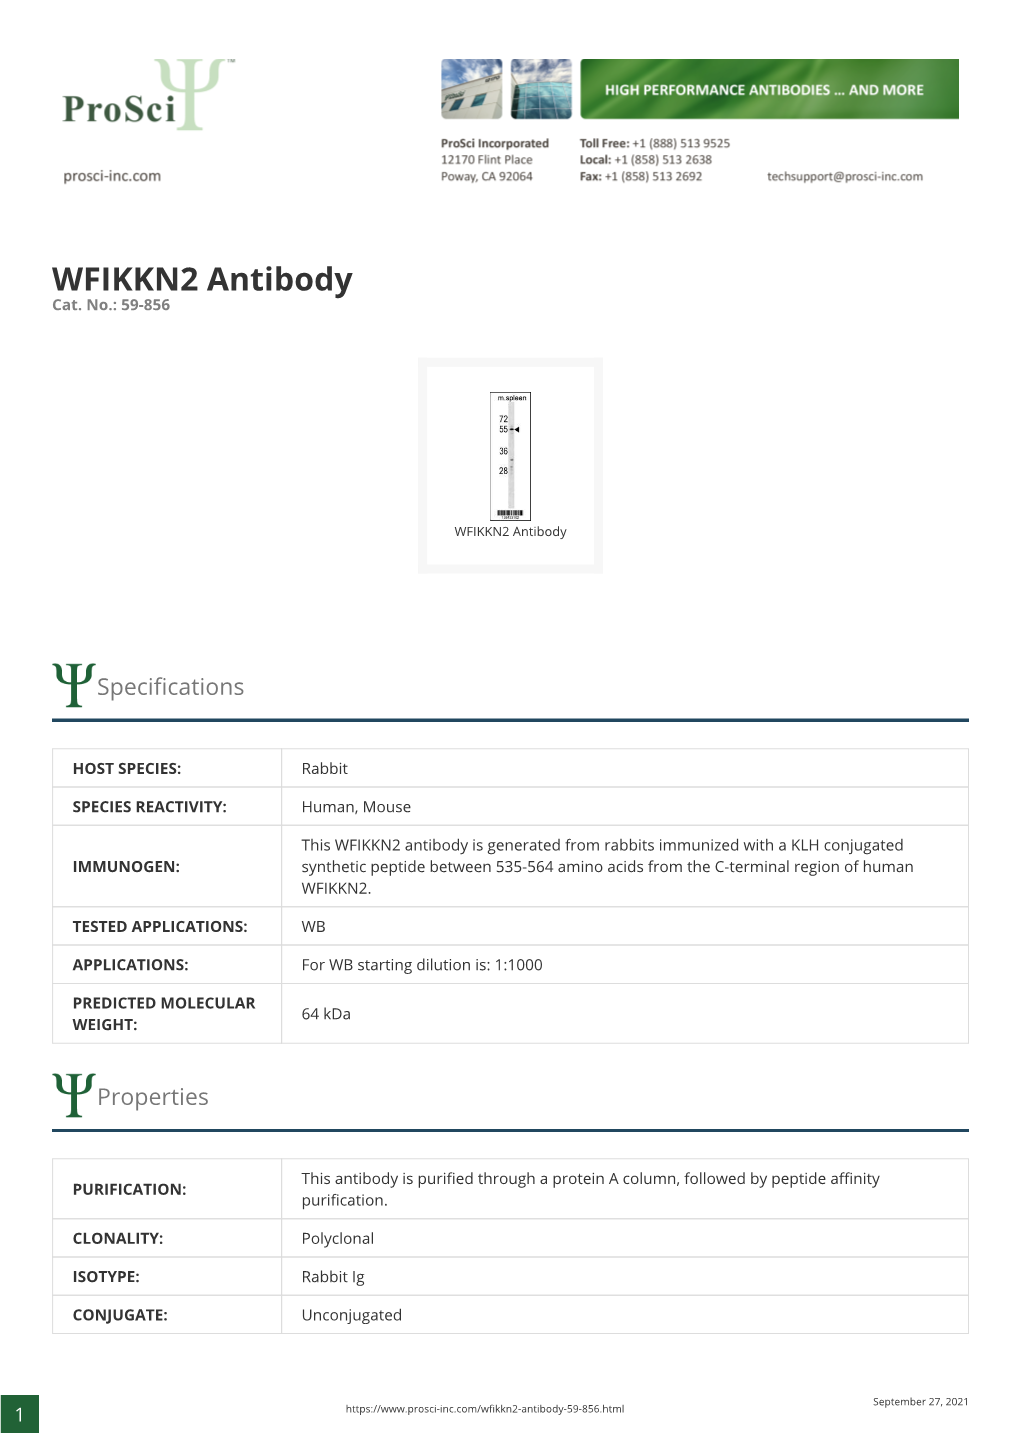 WFIKKN2 Antibody Cat